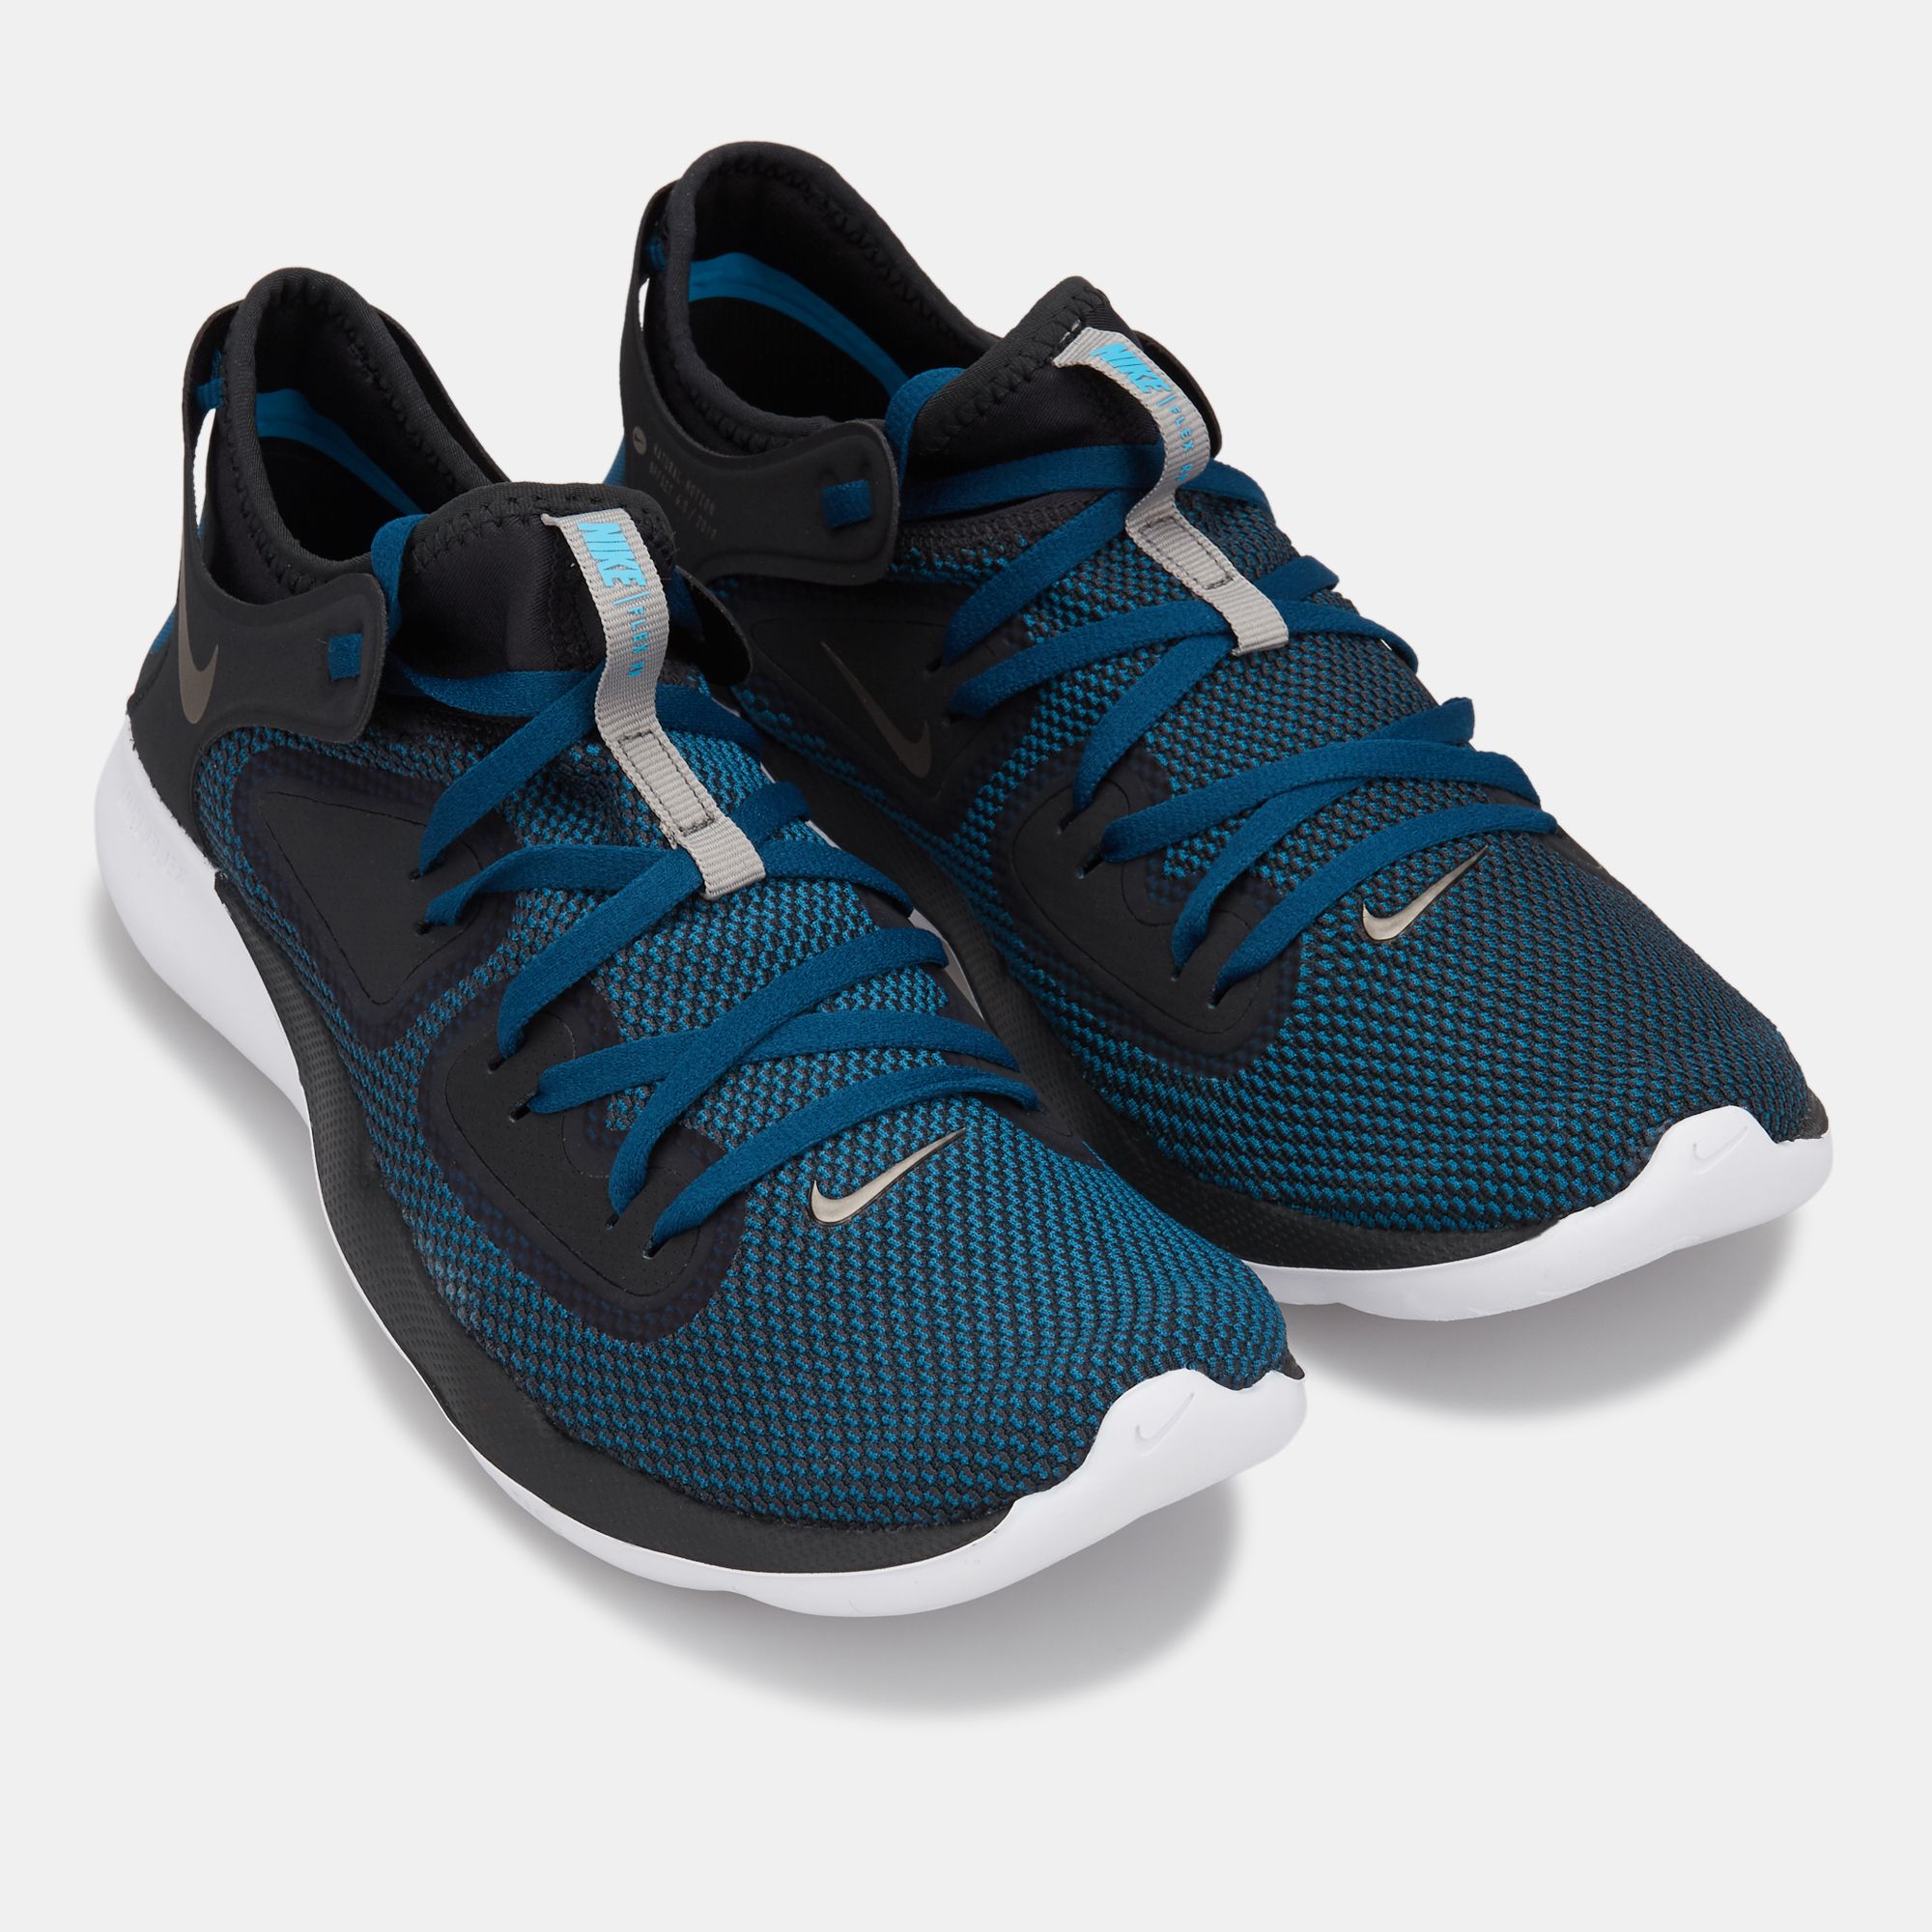 Buy Nike Men's Flex RN 2019 Shoe Online in Dubai, UAE | SSS